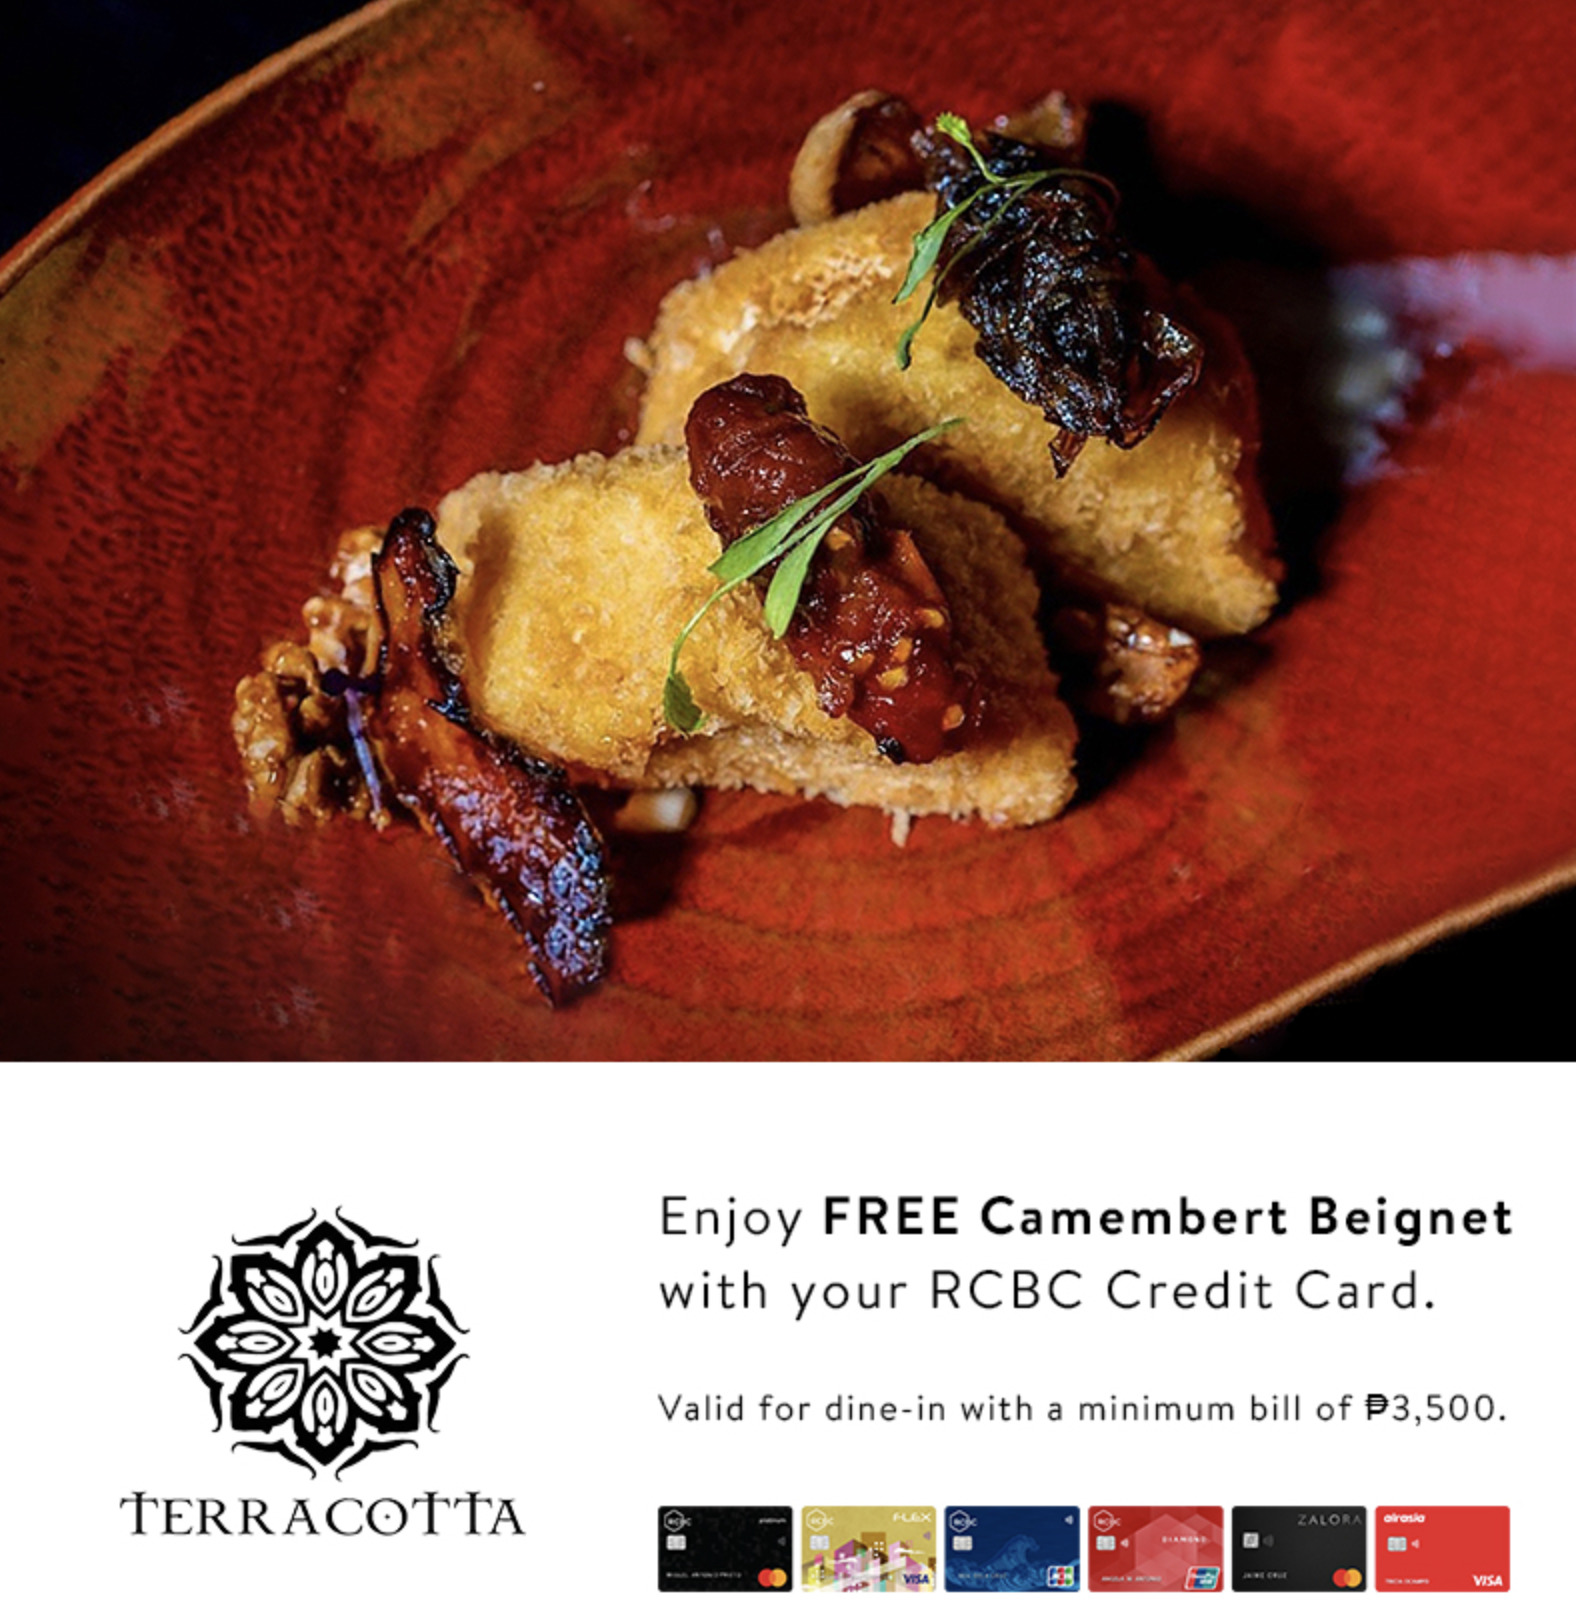 rcbc credit card promos - Free Camembert Beignet at Terracotta